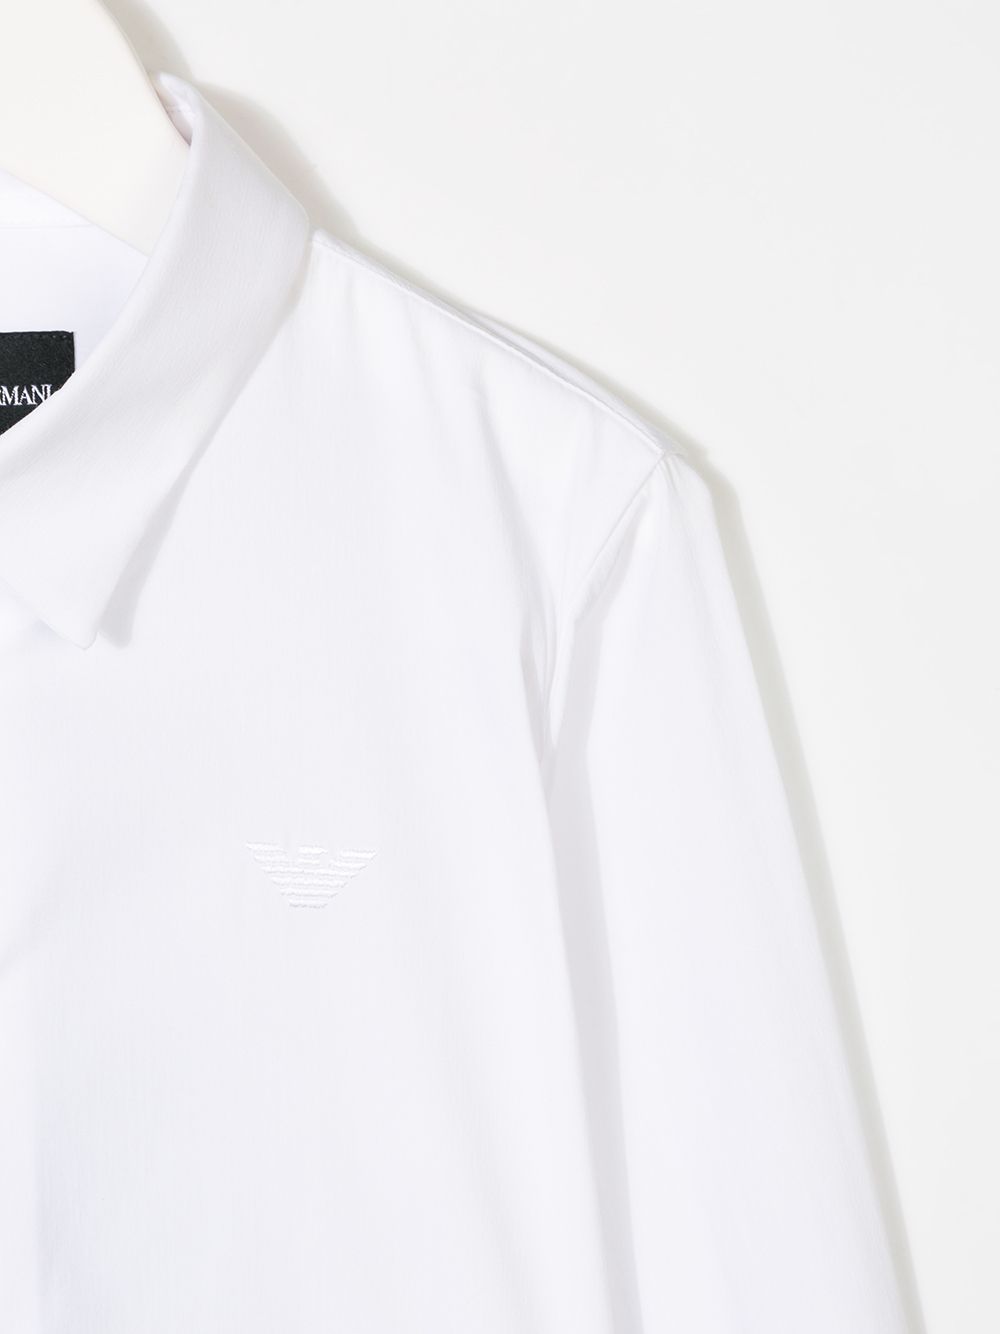 Camicia bianca per bambino con logo